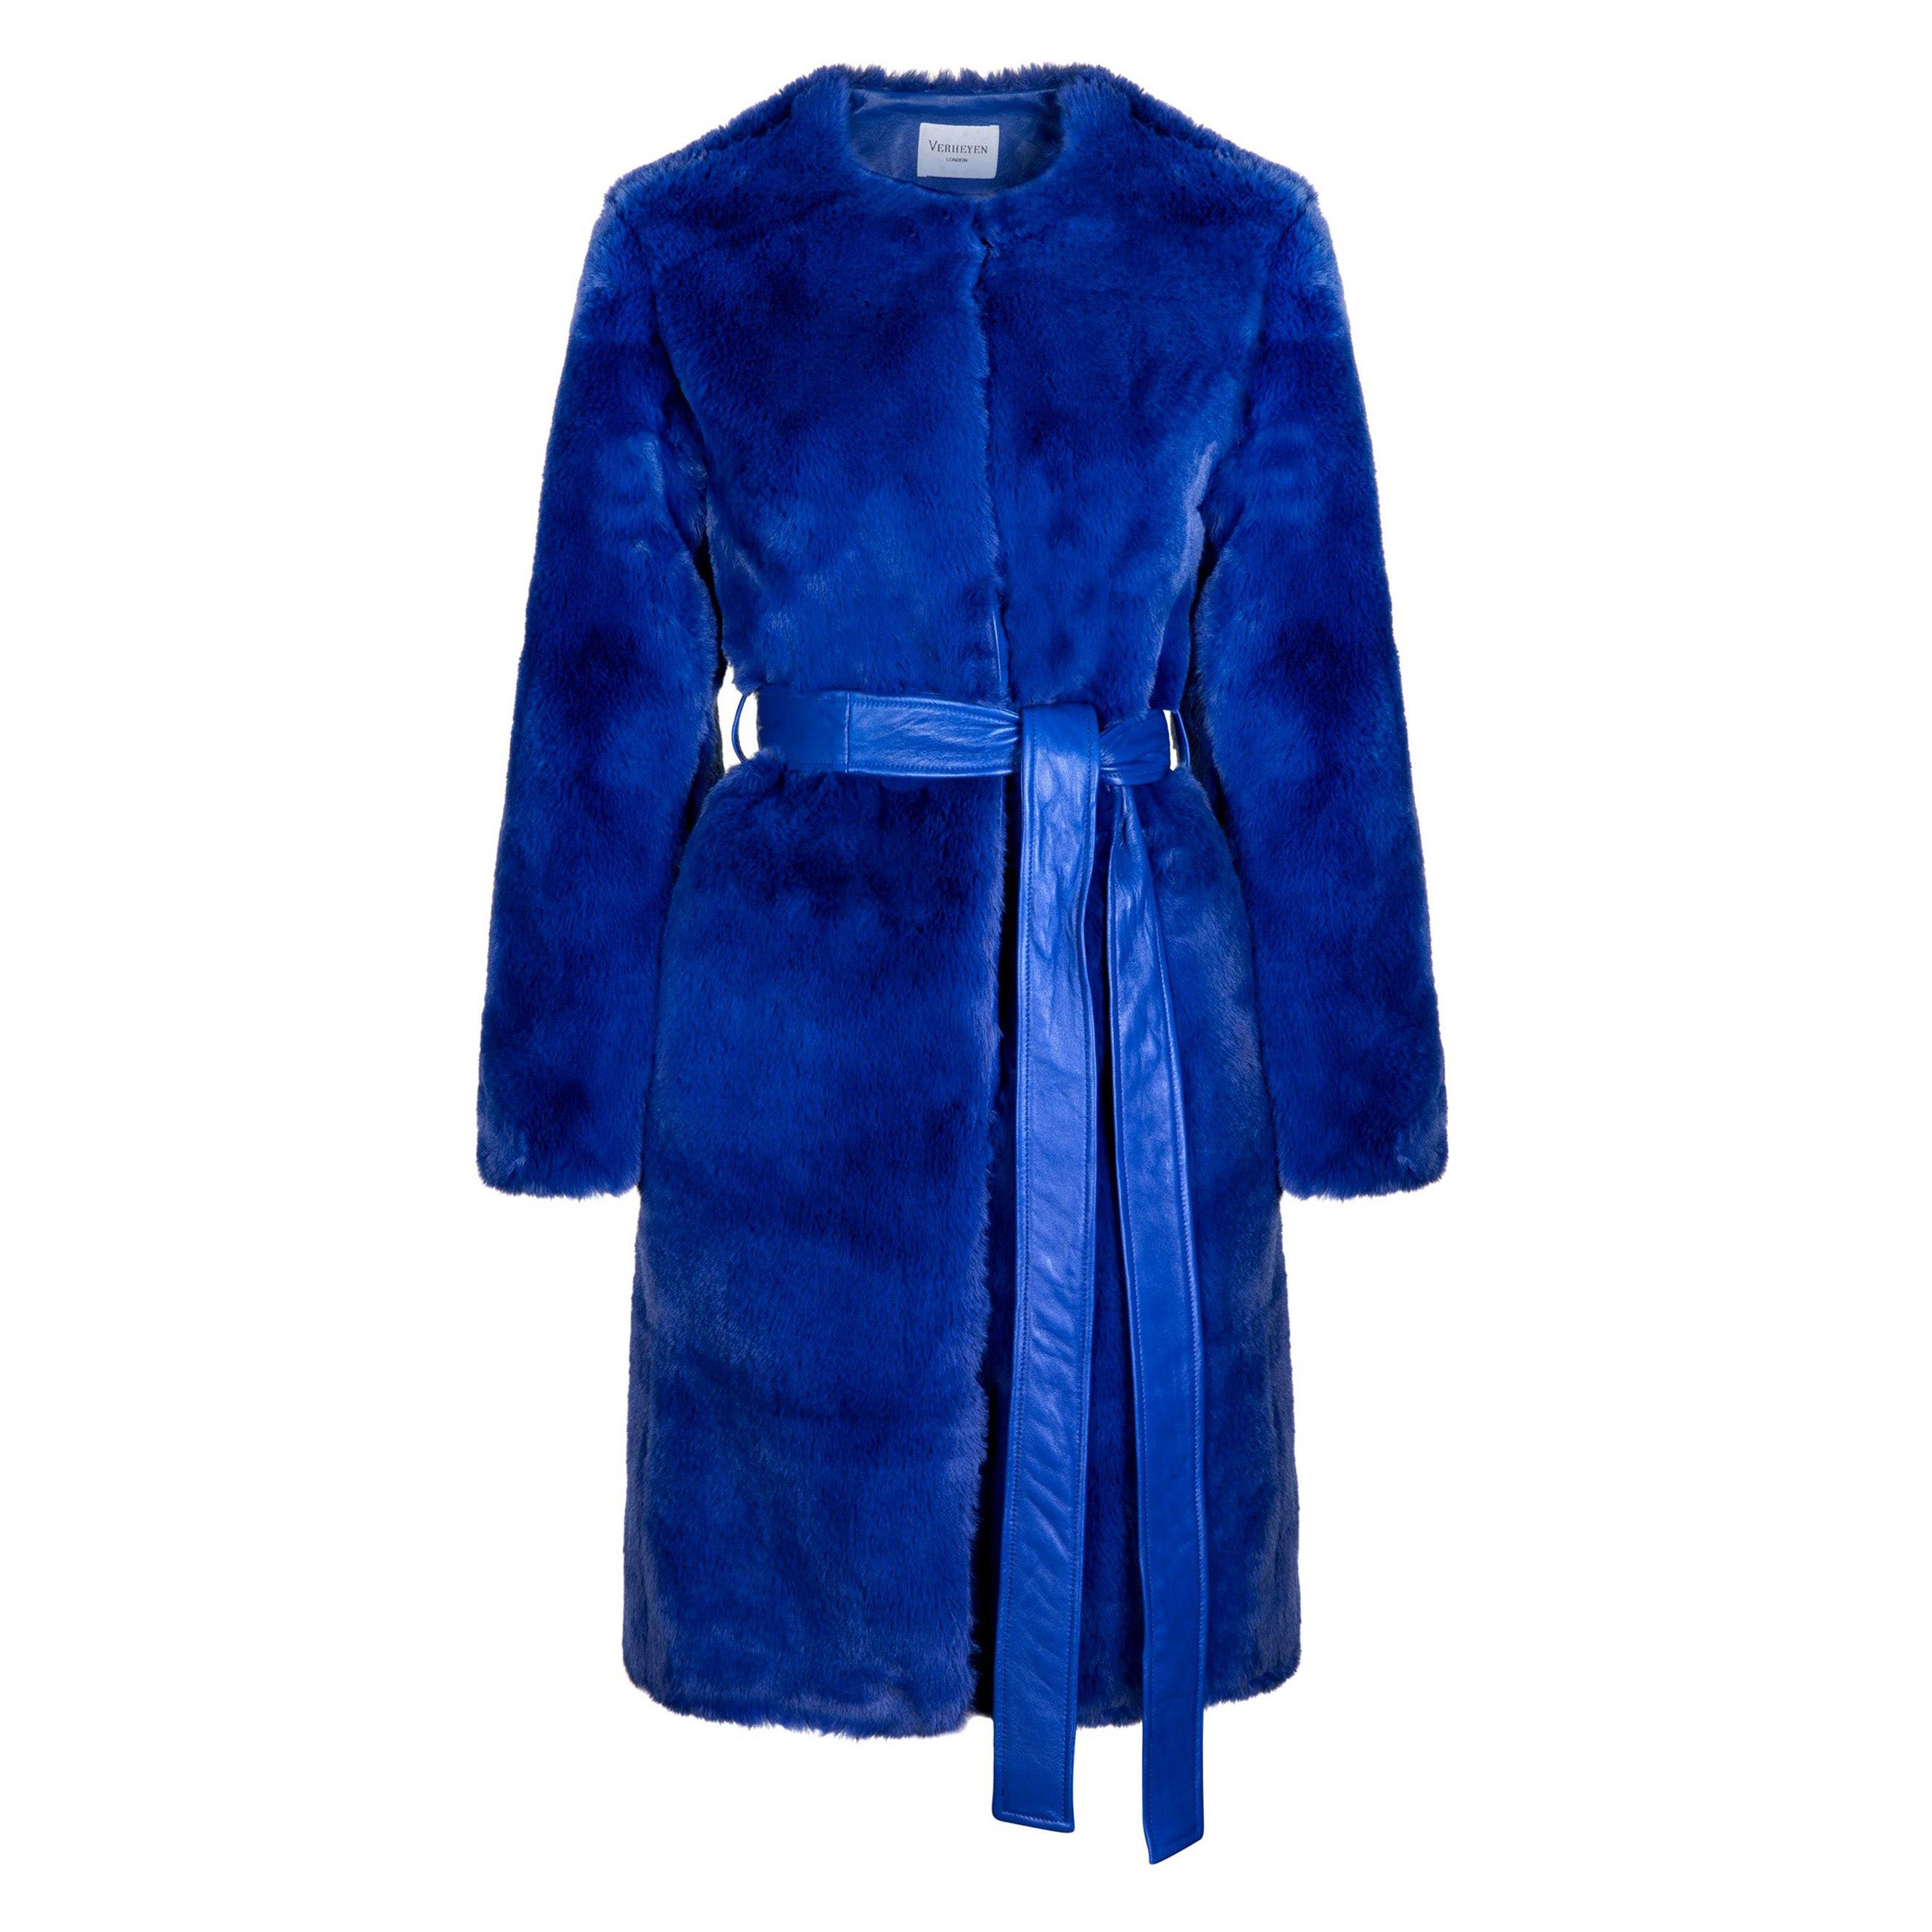 Verheyen London Serena  Collarless Faux Fur Coat in Blue - Size uk 8 For Sale